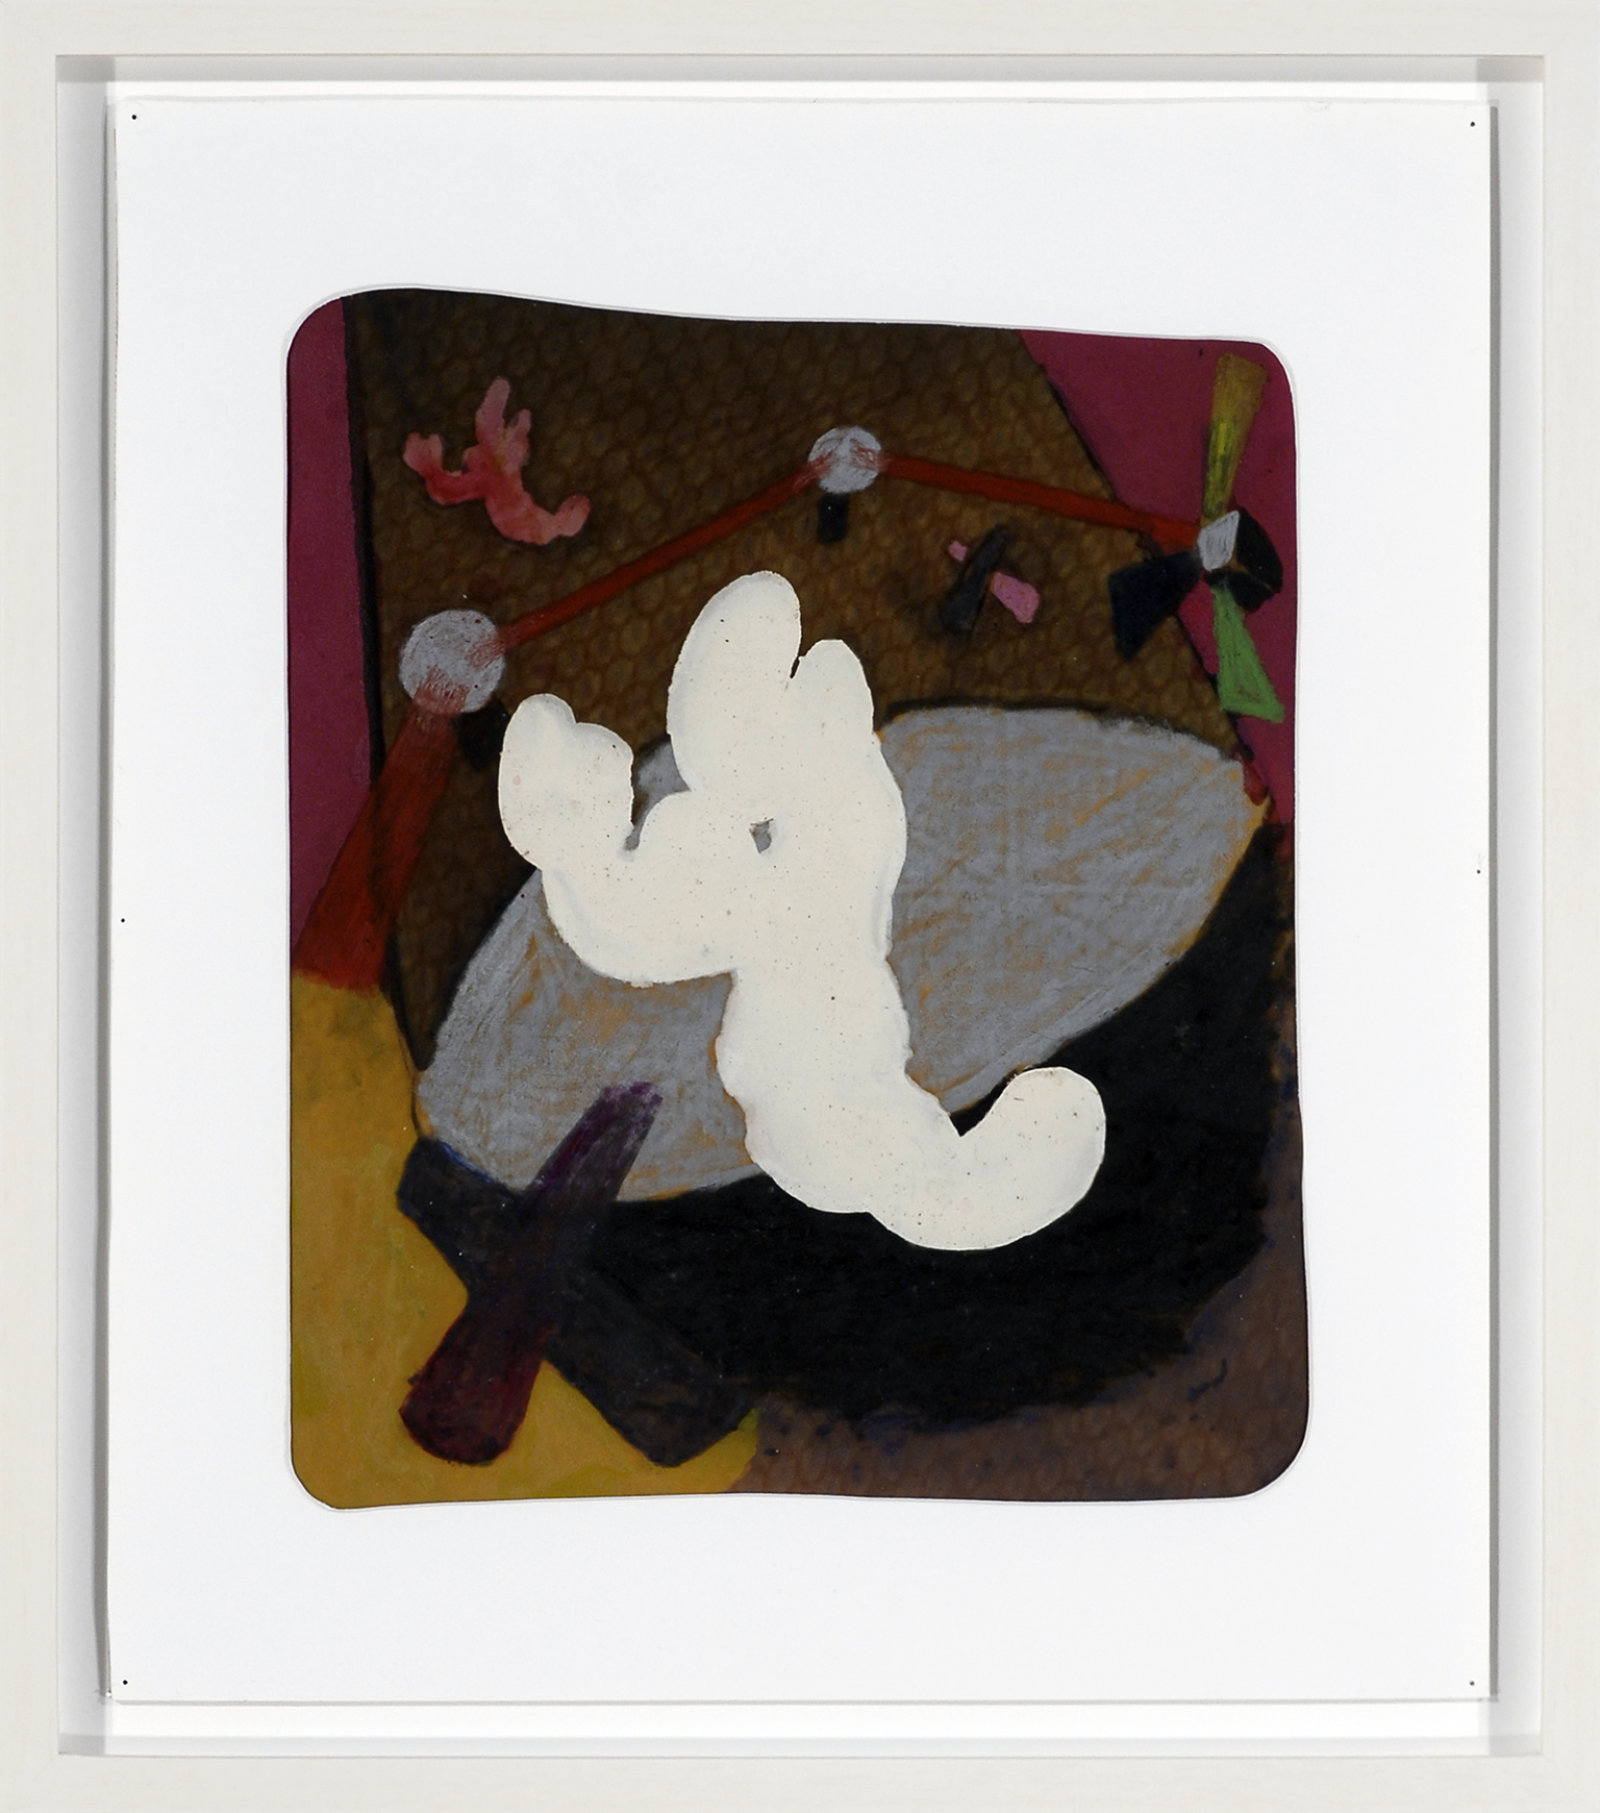 Jerry Pethick, Prawn Man, 1968, paint, pastel, rolux, 23 x 20 in. (57 x 51 cm)